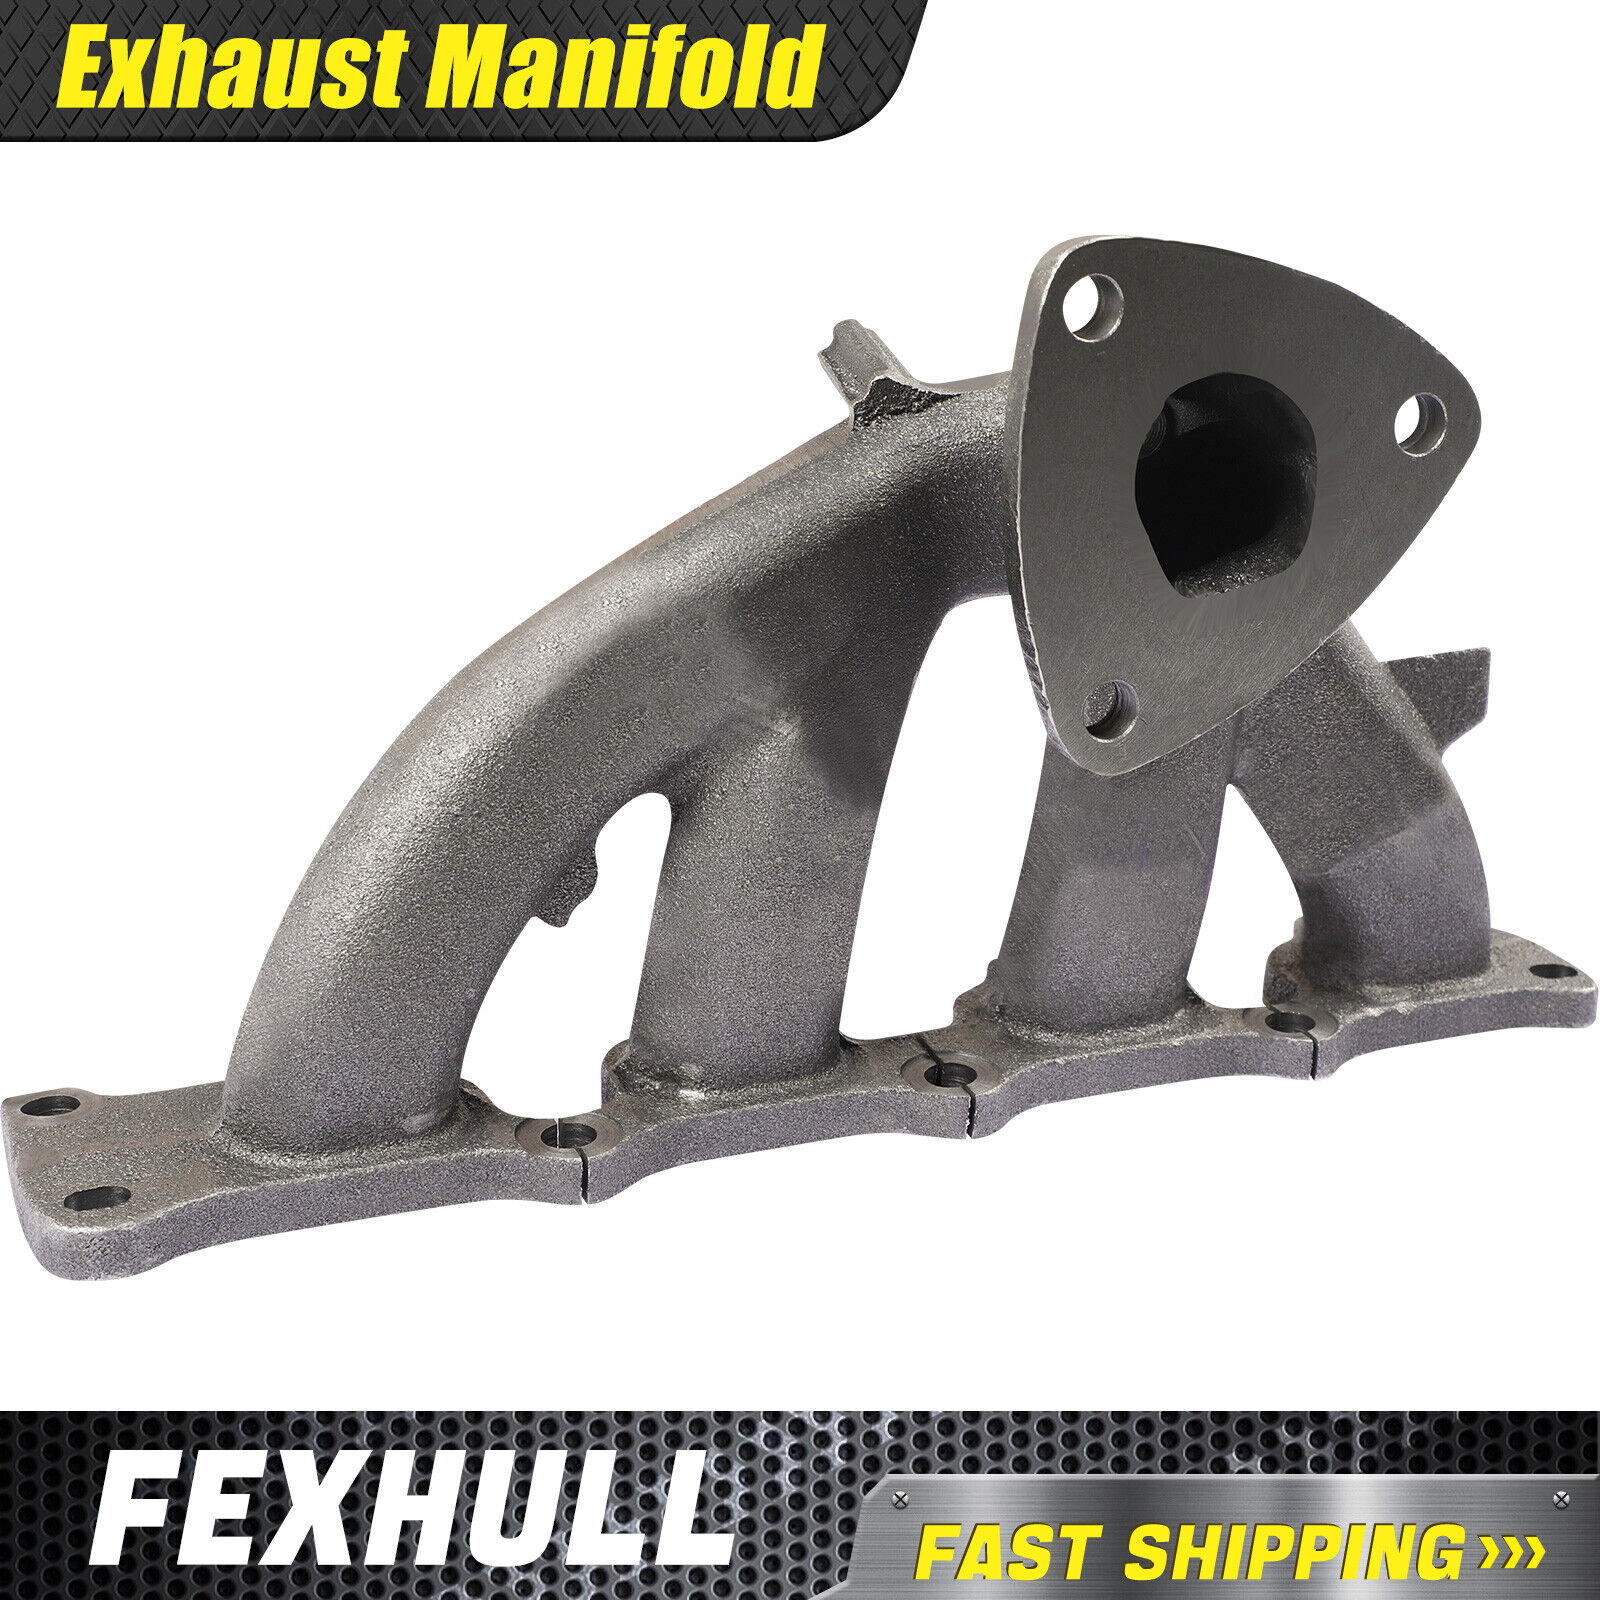 Exhaust Manifold for 2.4L 2010-2015 Chevrolet Captiva Sport Equinox GMC Terrain